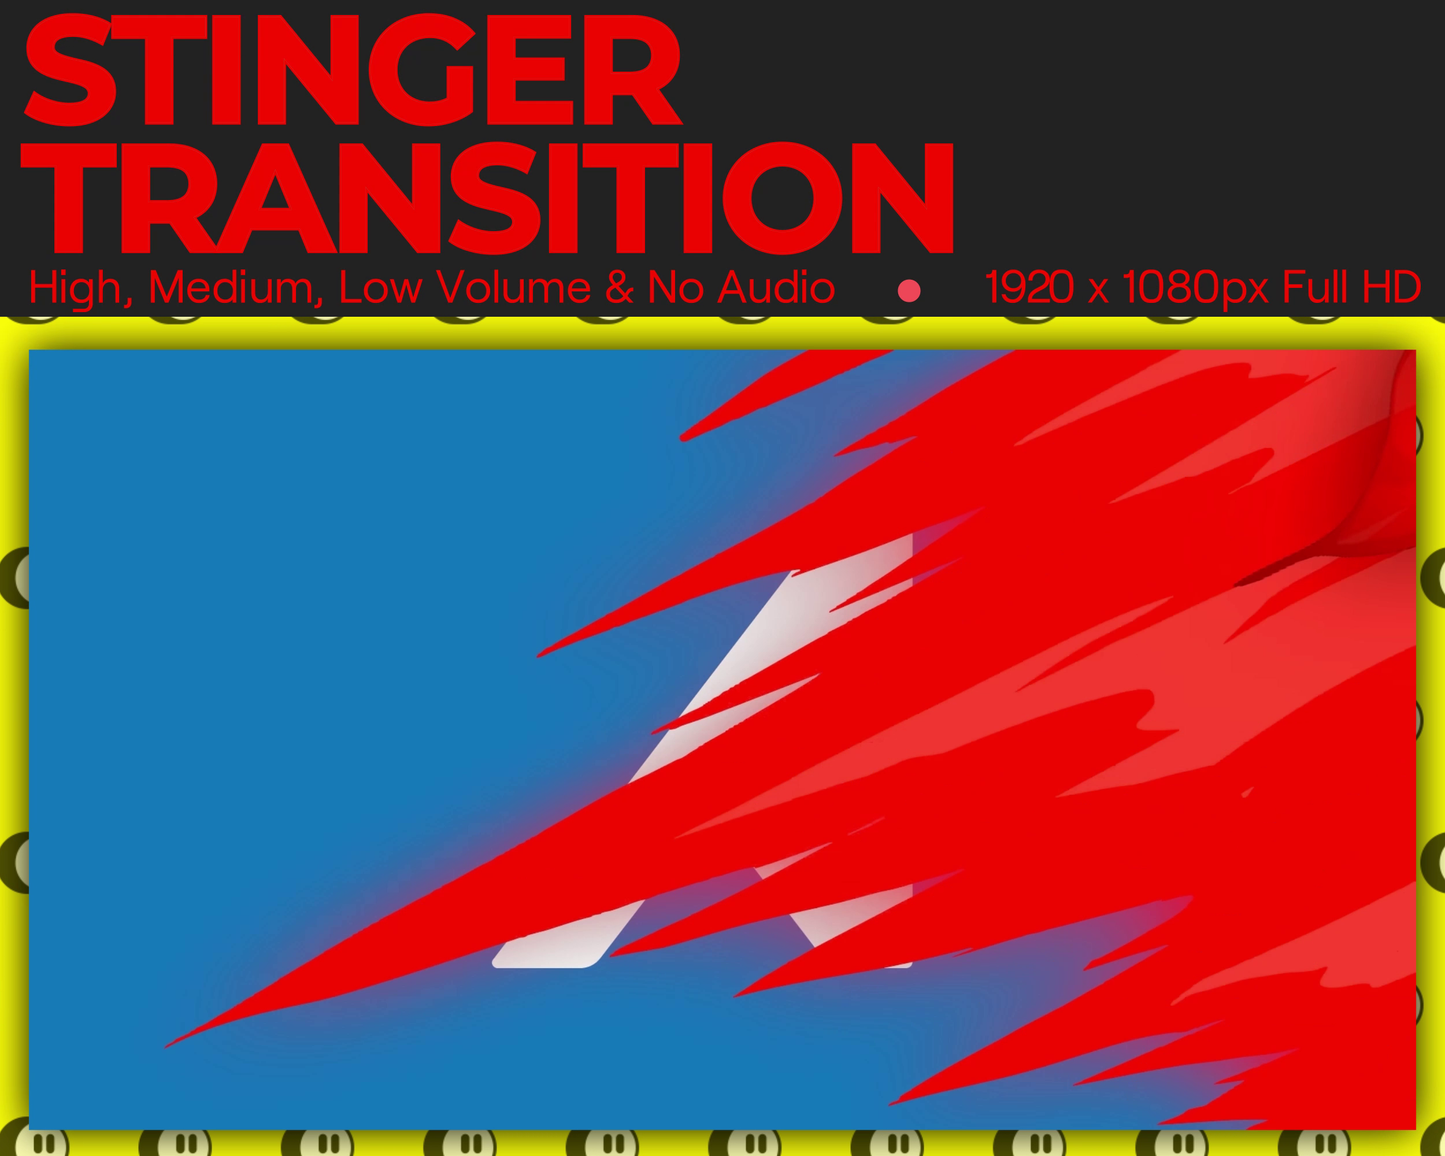 Fire Stinger Transition